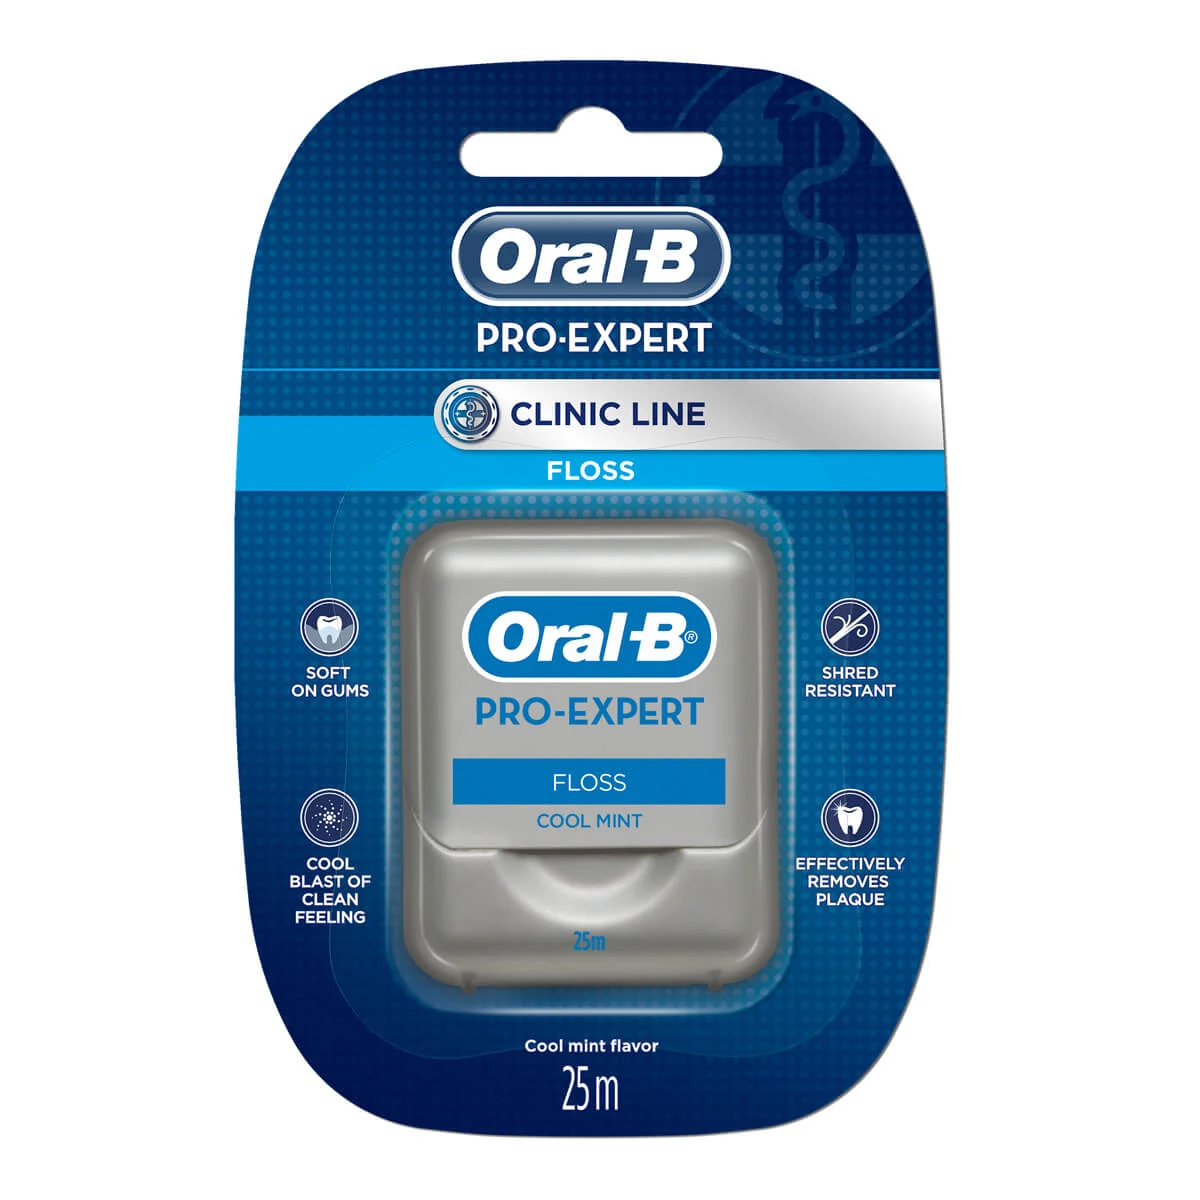 Oral-B Pro-Expert Clinic Line Floss 